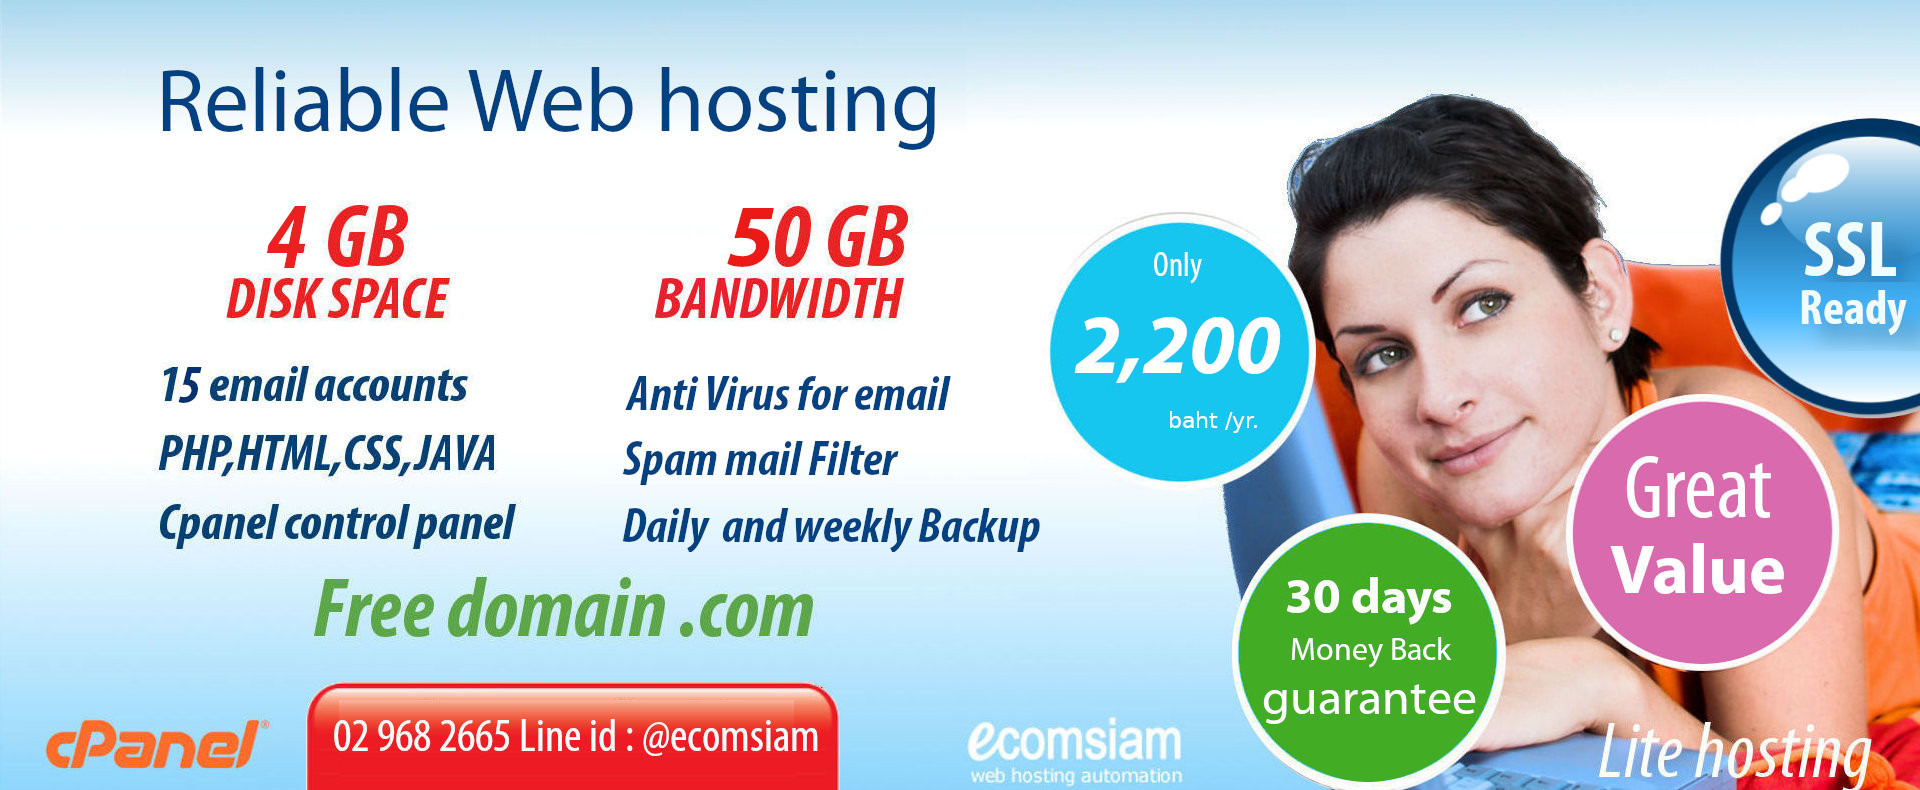 Lite hosting thai ไทย เพียง 1600 บาทต่อปี ฟรีโดเมนเนม พร้อมใบรับรอง SSL